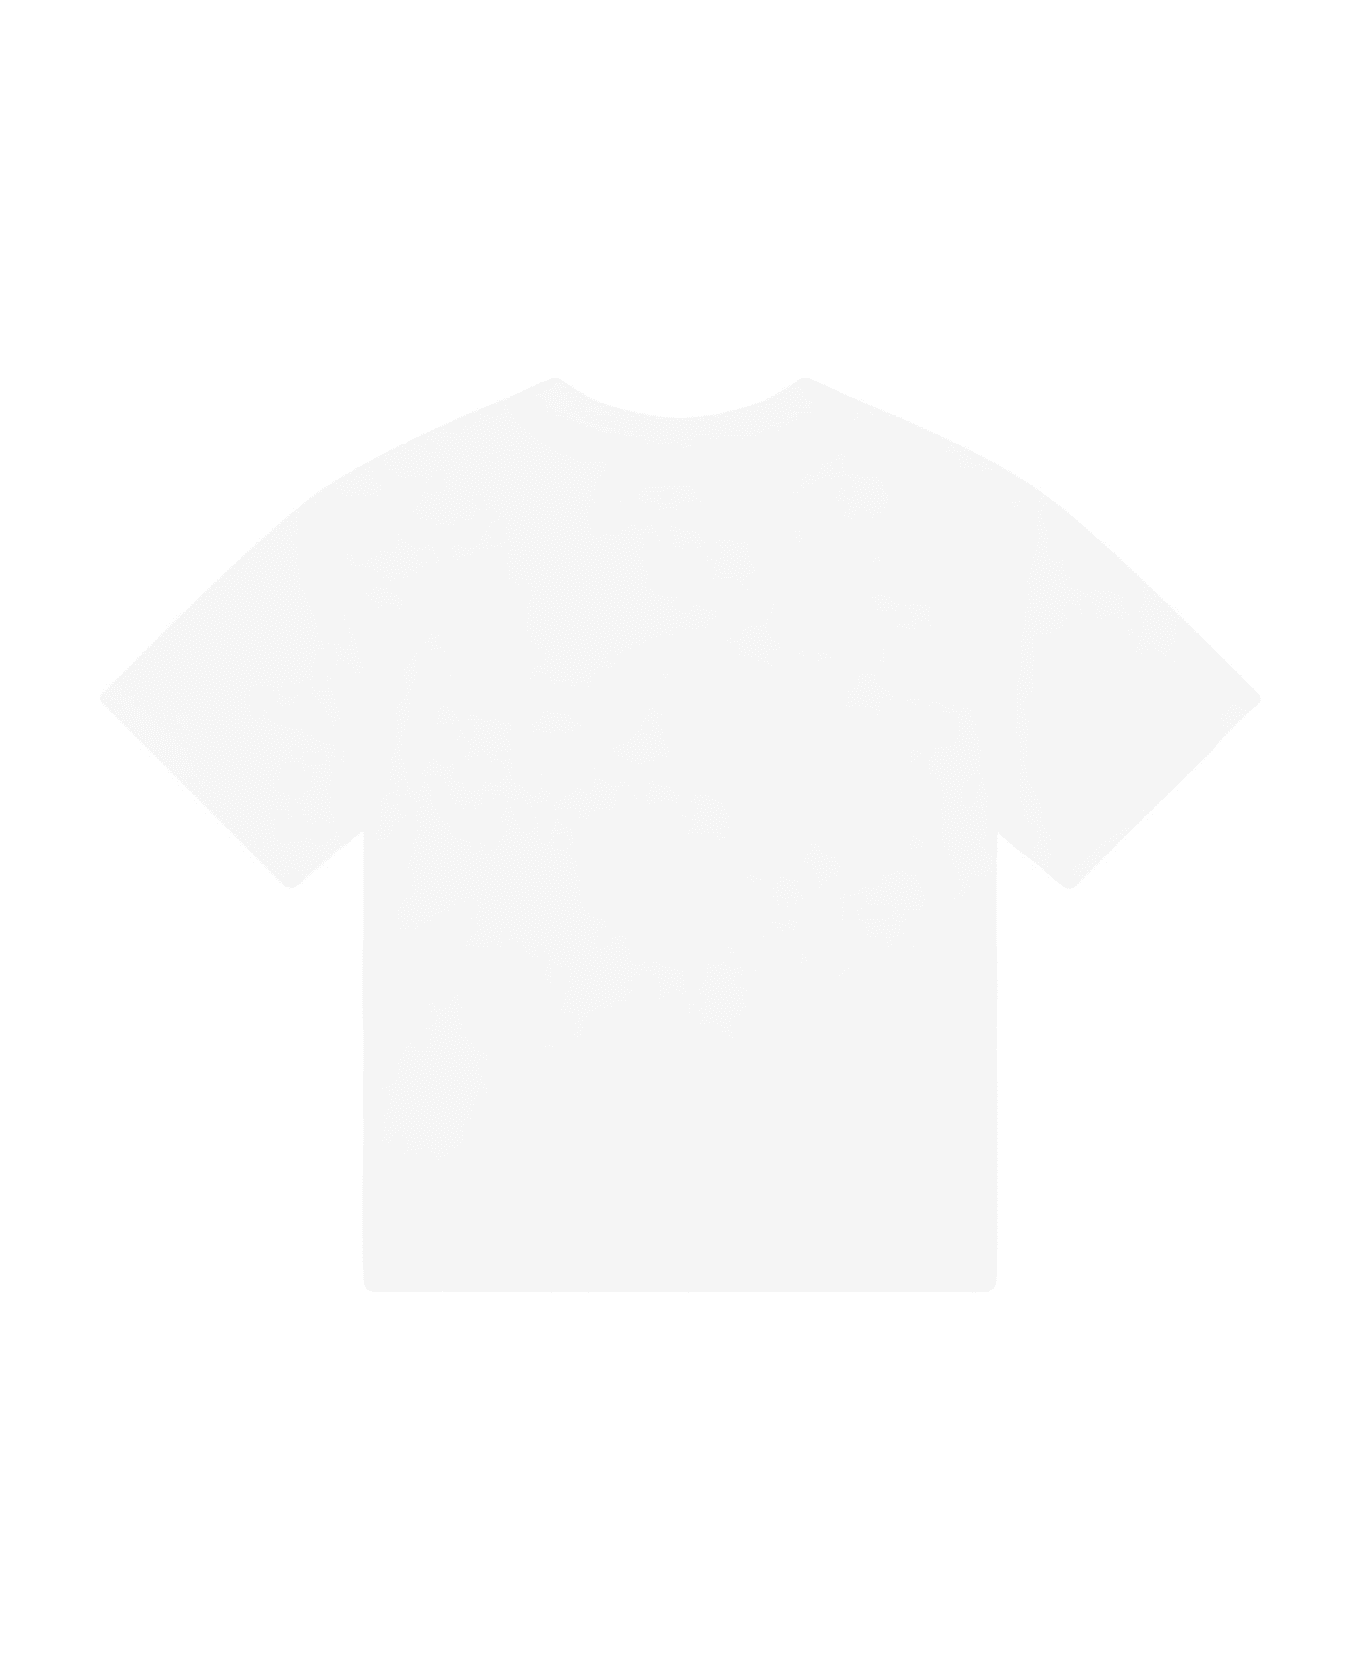 Kenzo Kids T-shirt With Graphic Print - White